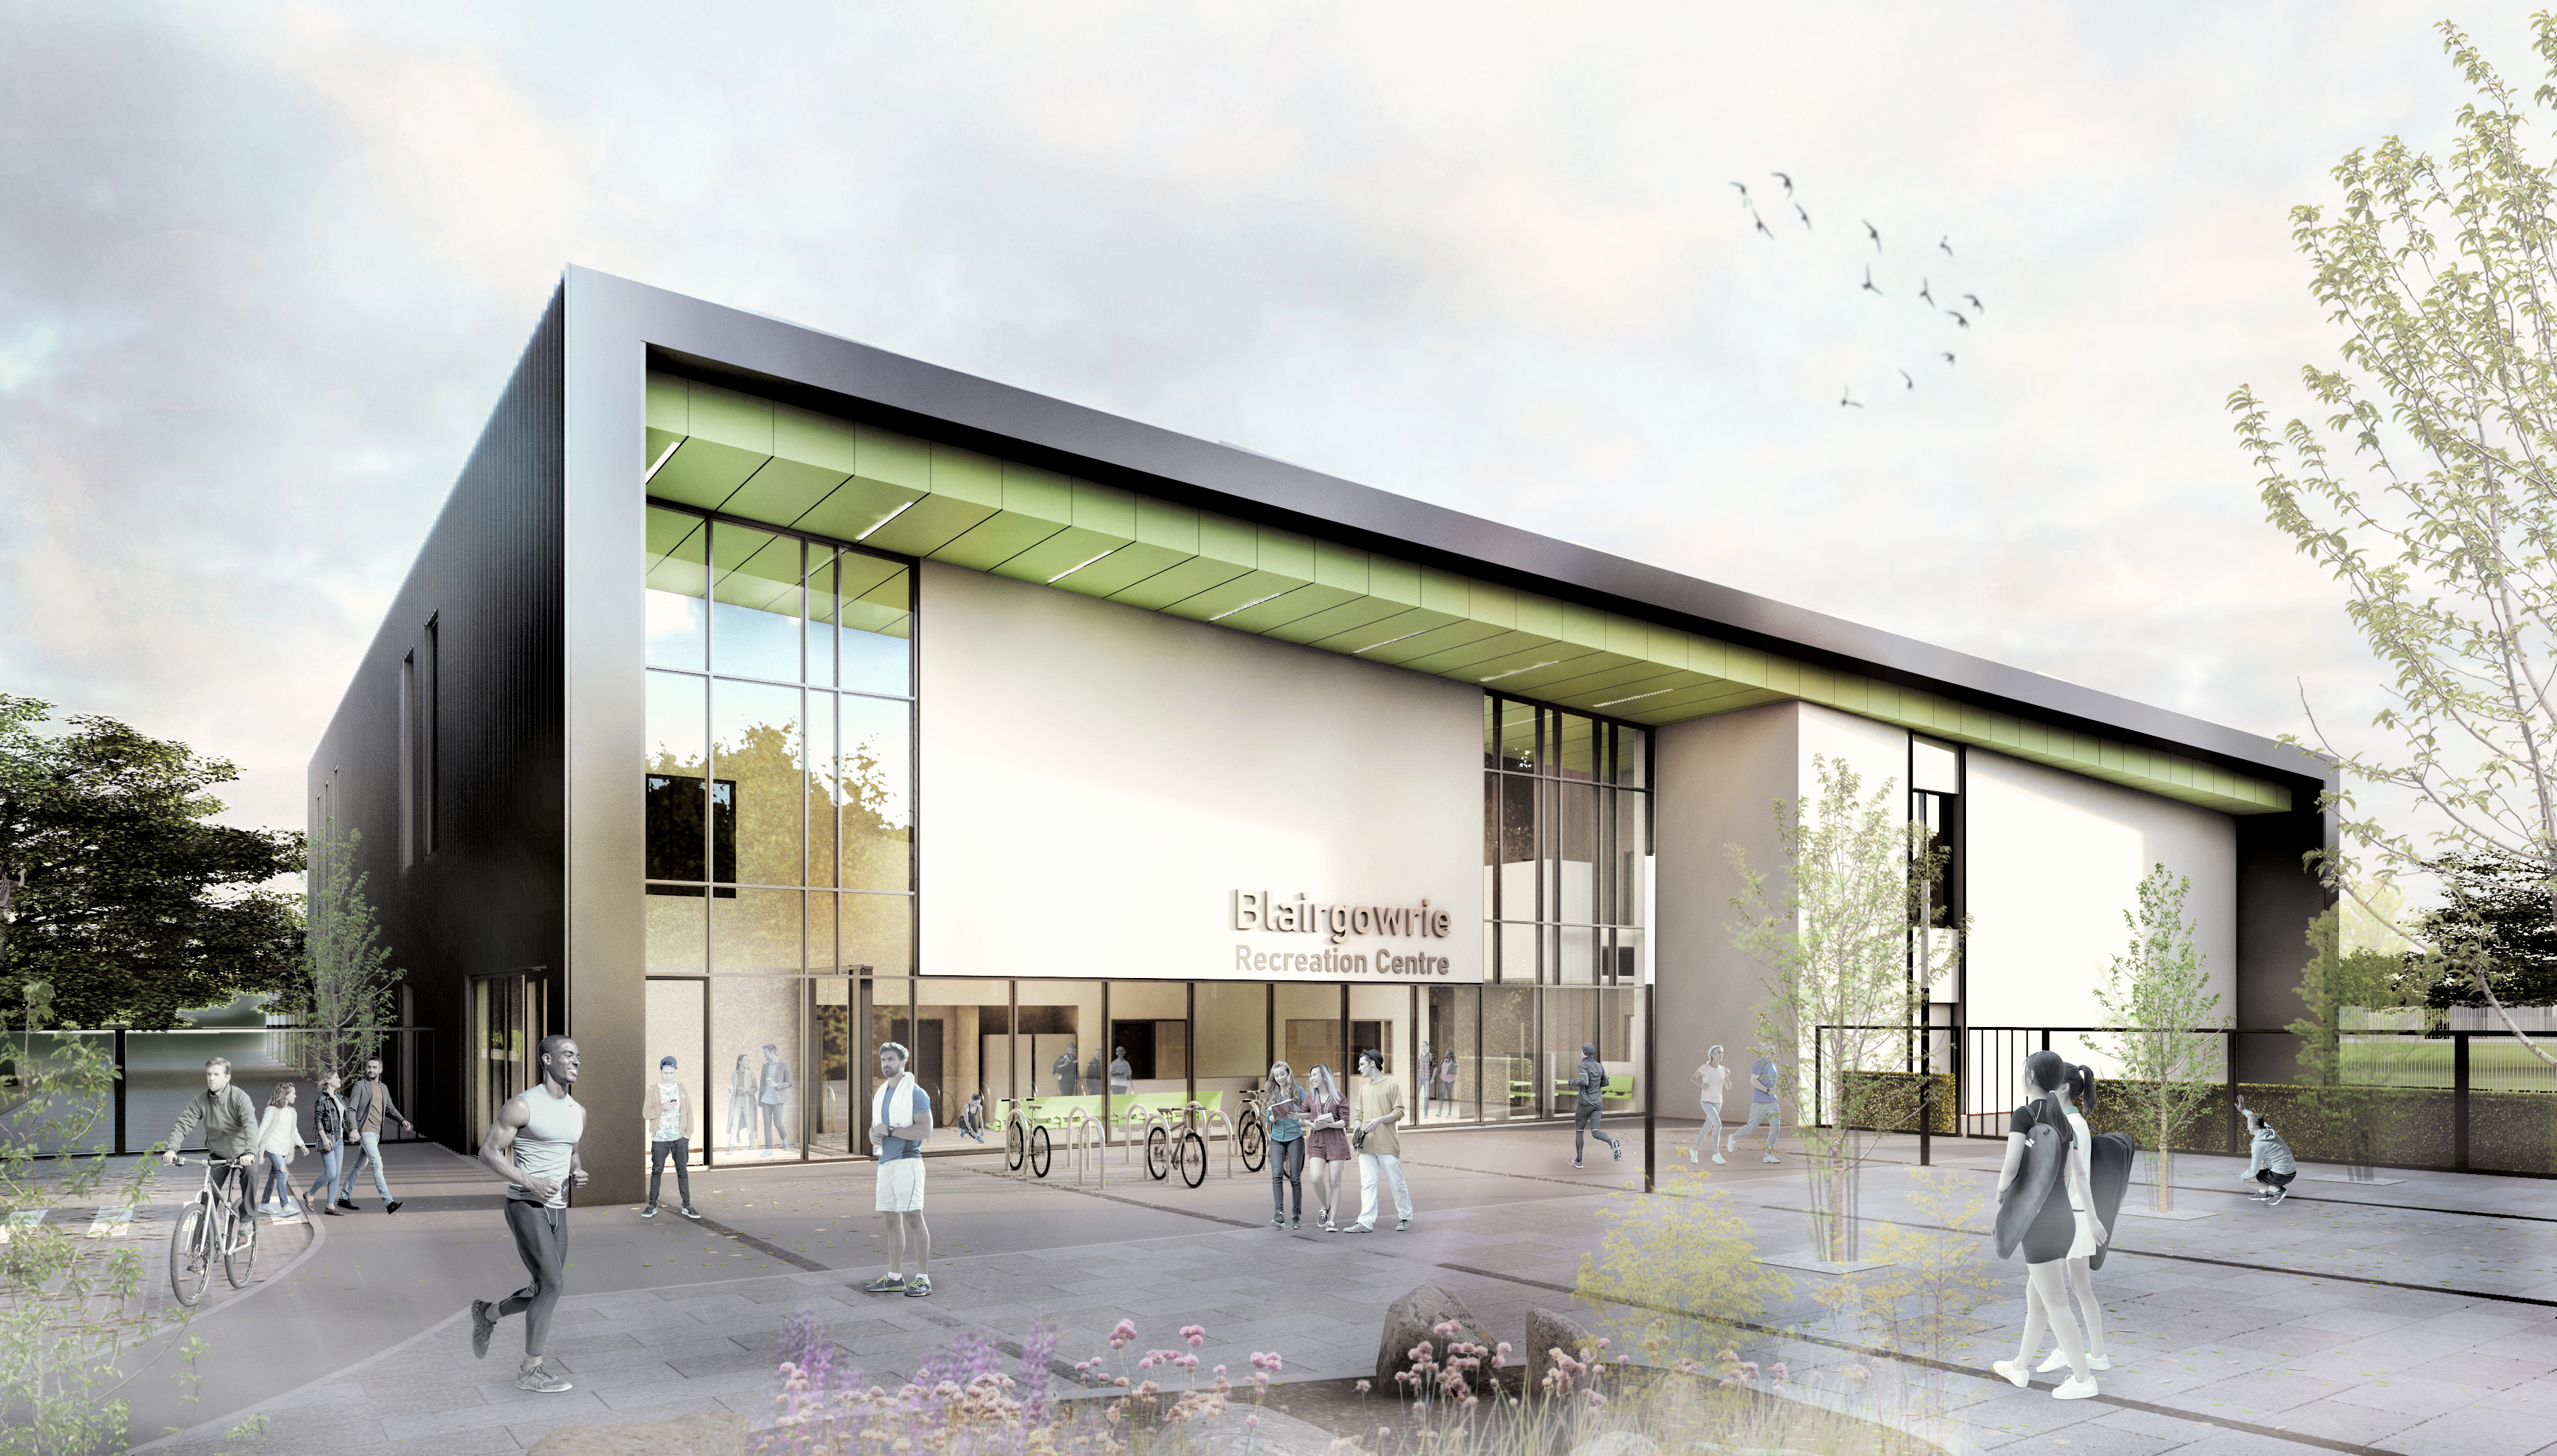 Work underway on new £36m Blairgowrie sports centre